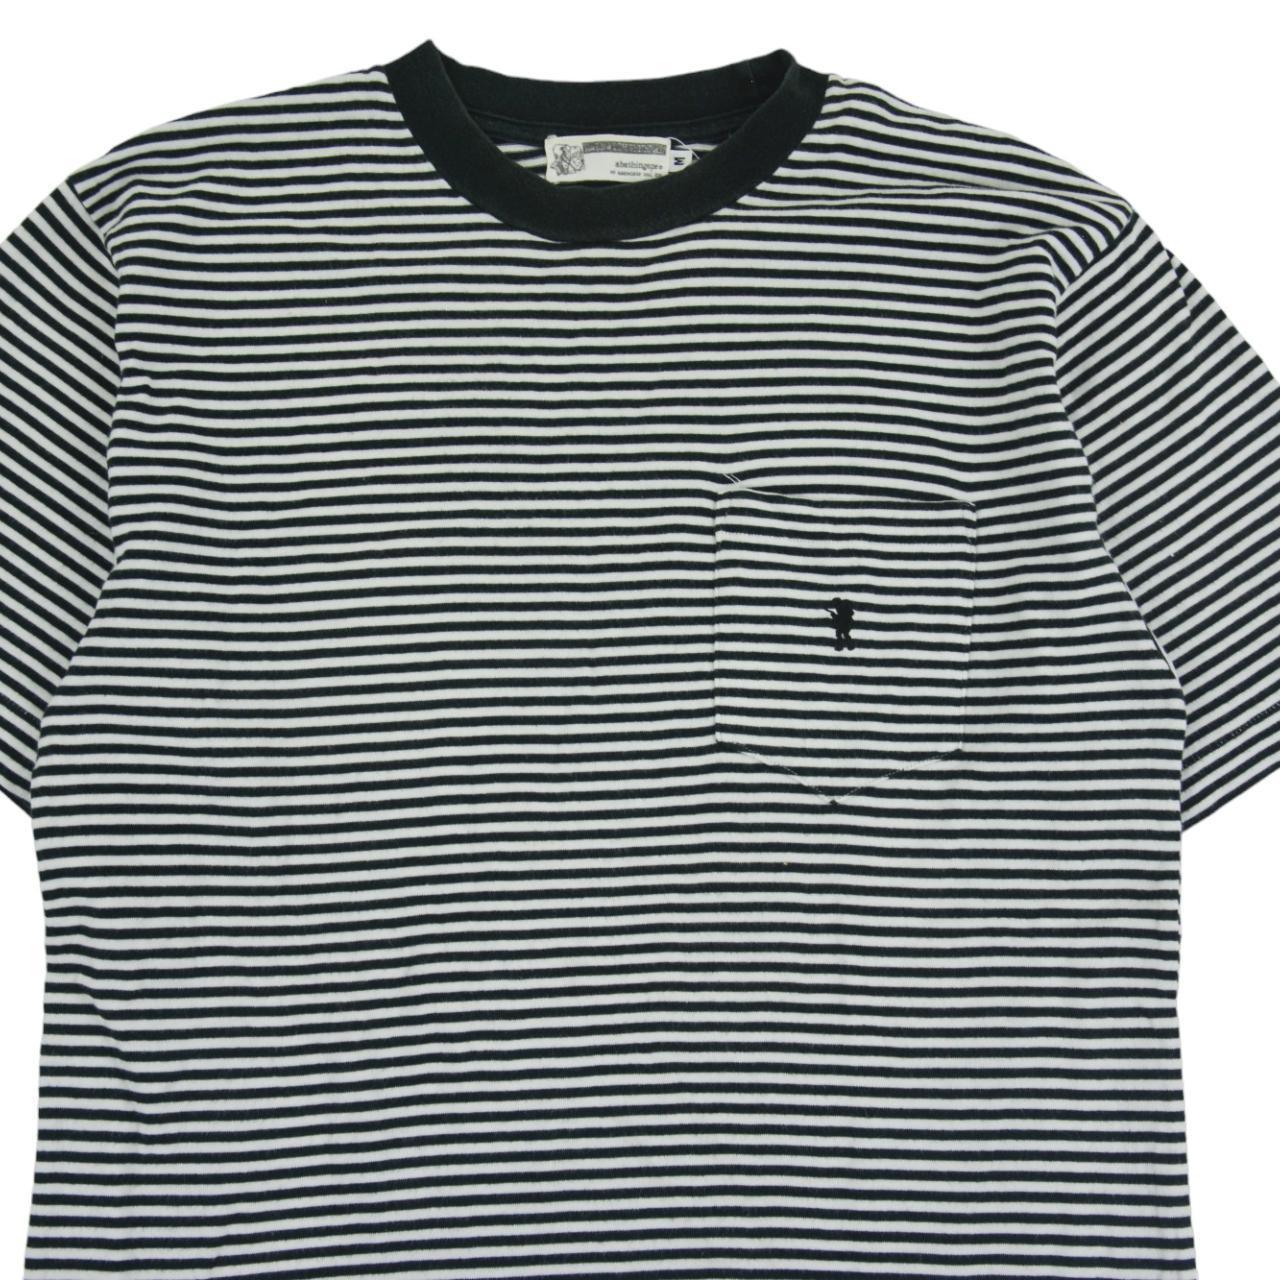 Vintage BAPE Striped T Shirt Size S - Known Source